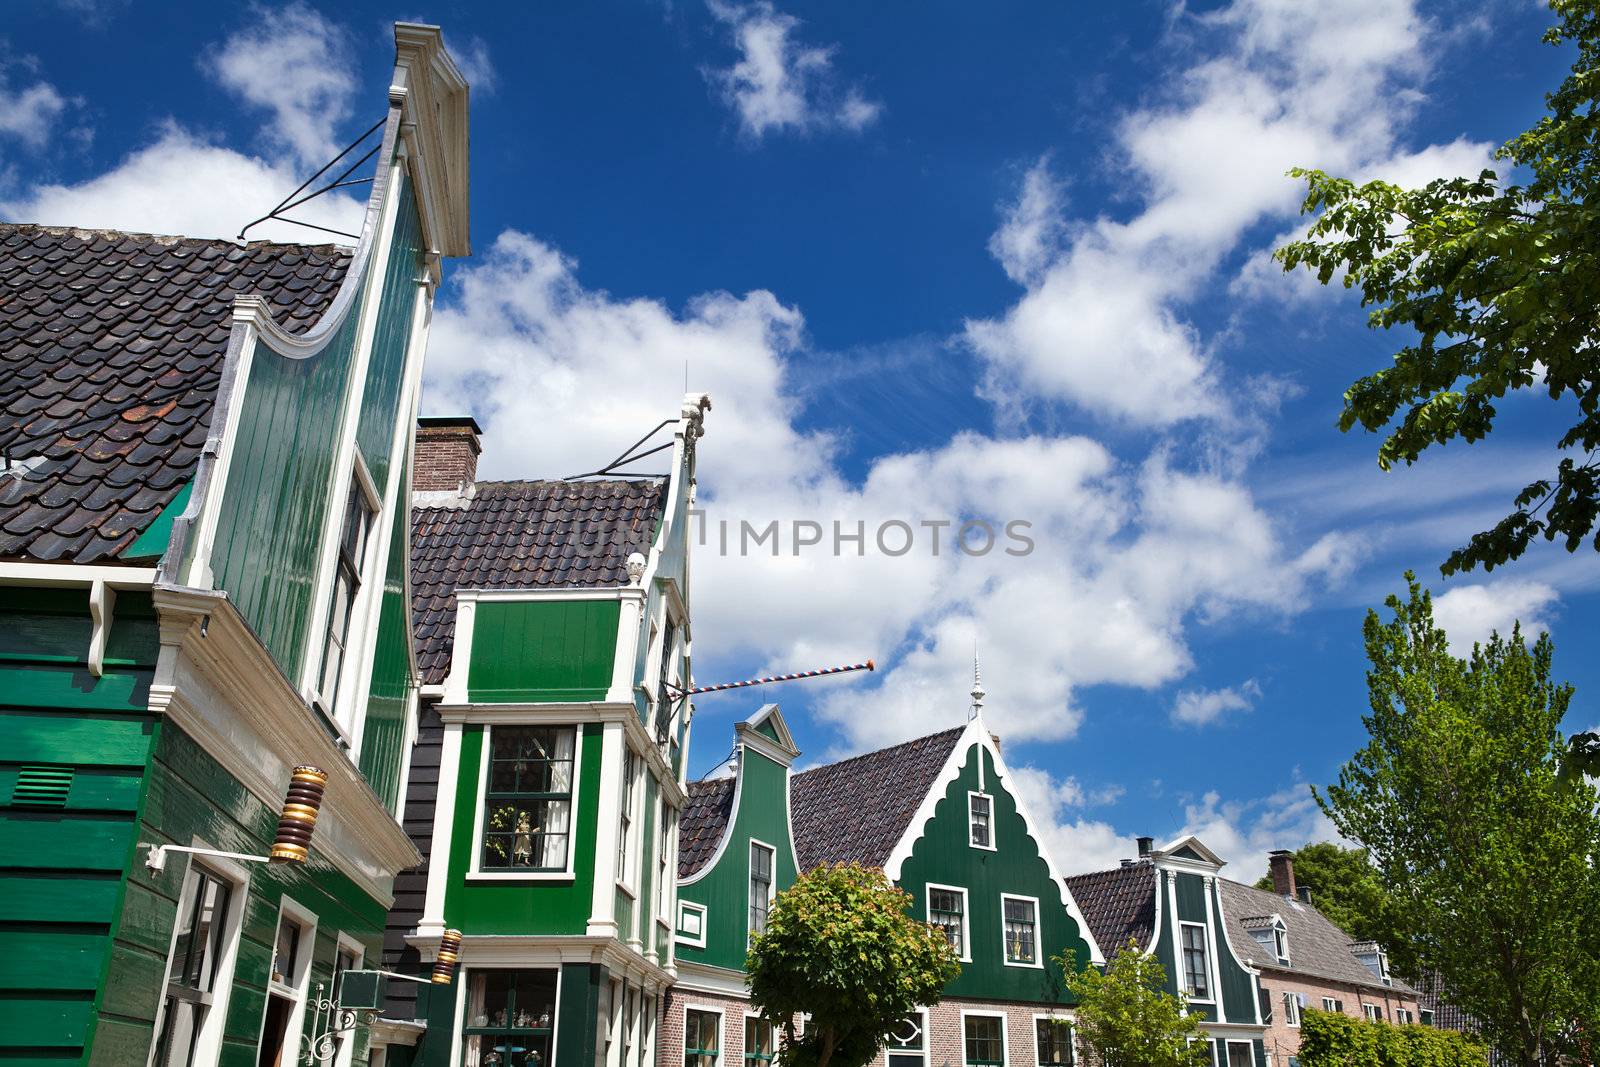 green traditional buildings in small Dutch town Zaanse Schans